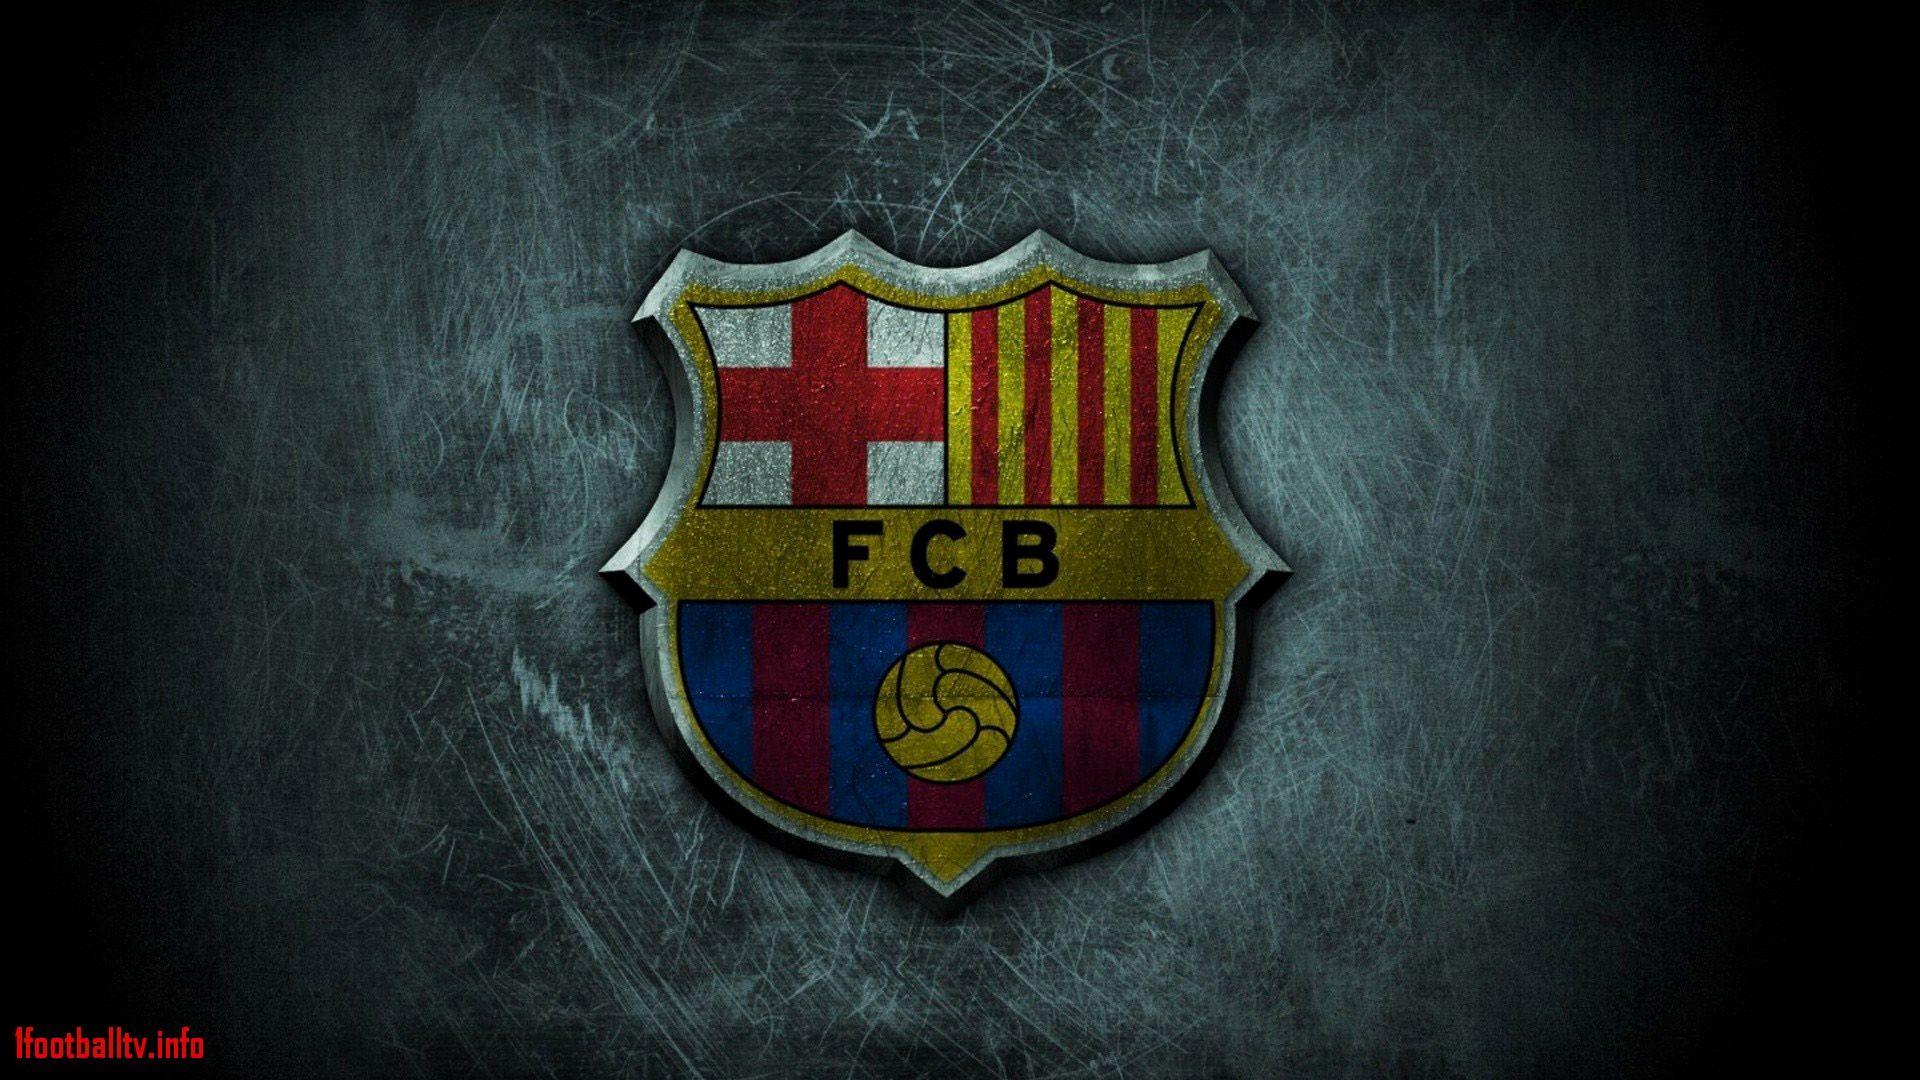 Awesome Wallpaper Fc Barcelona Terbaru 2016 Football HD